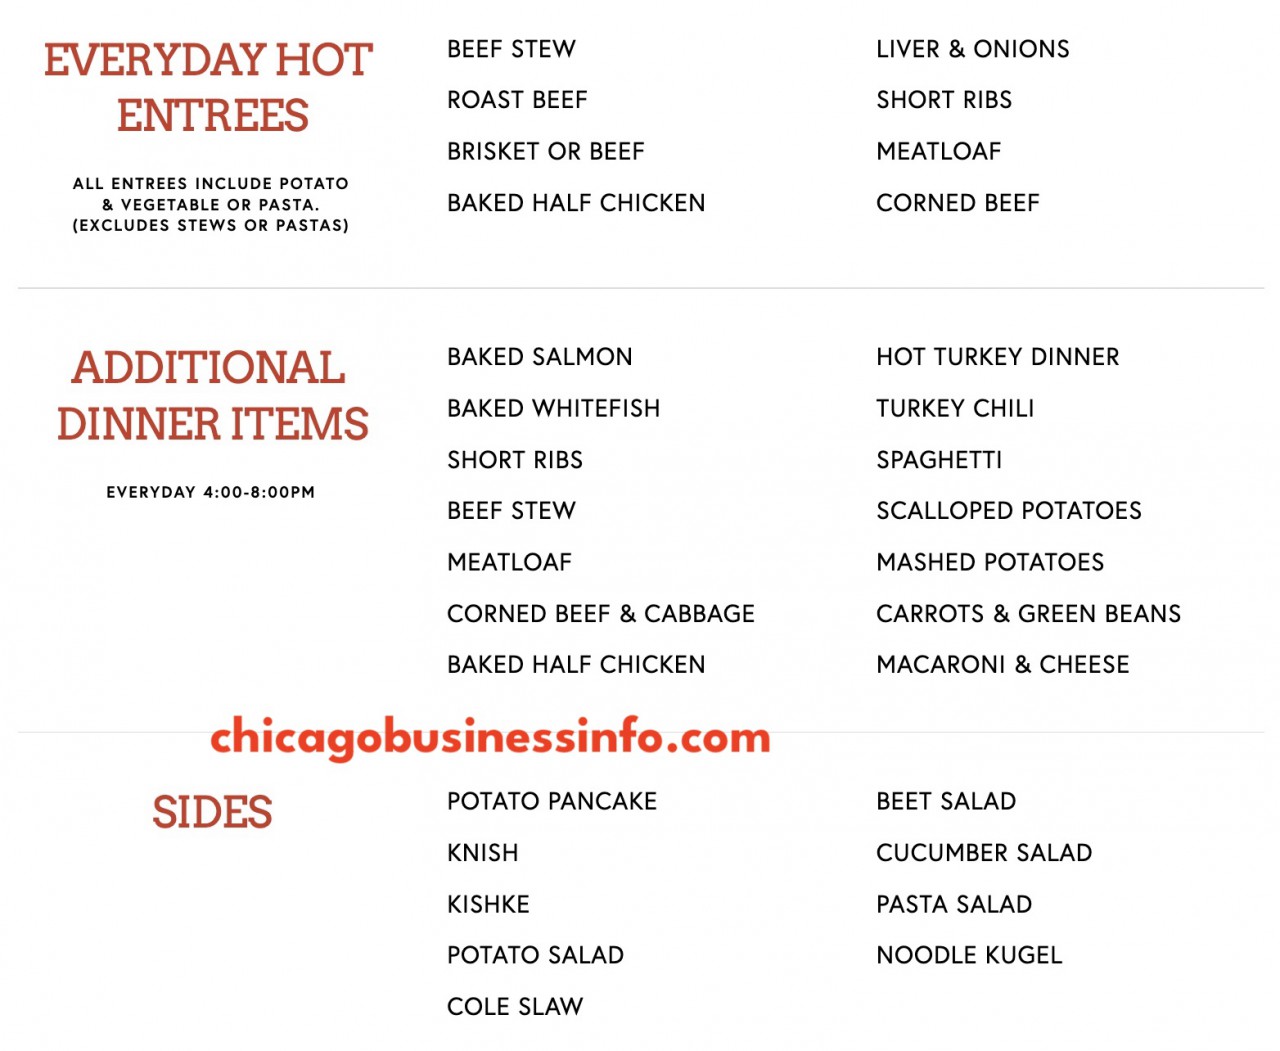 Mannys deli chicago everyday specials sides menu